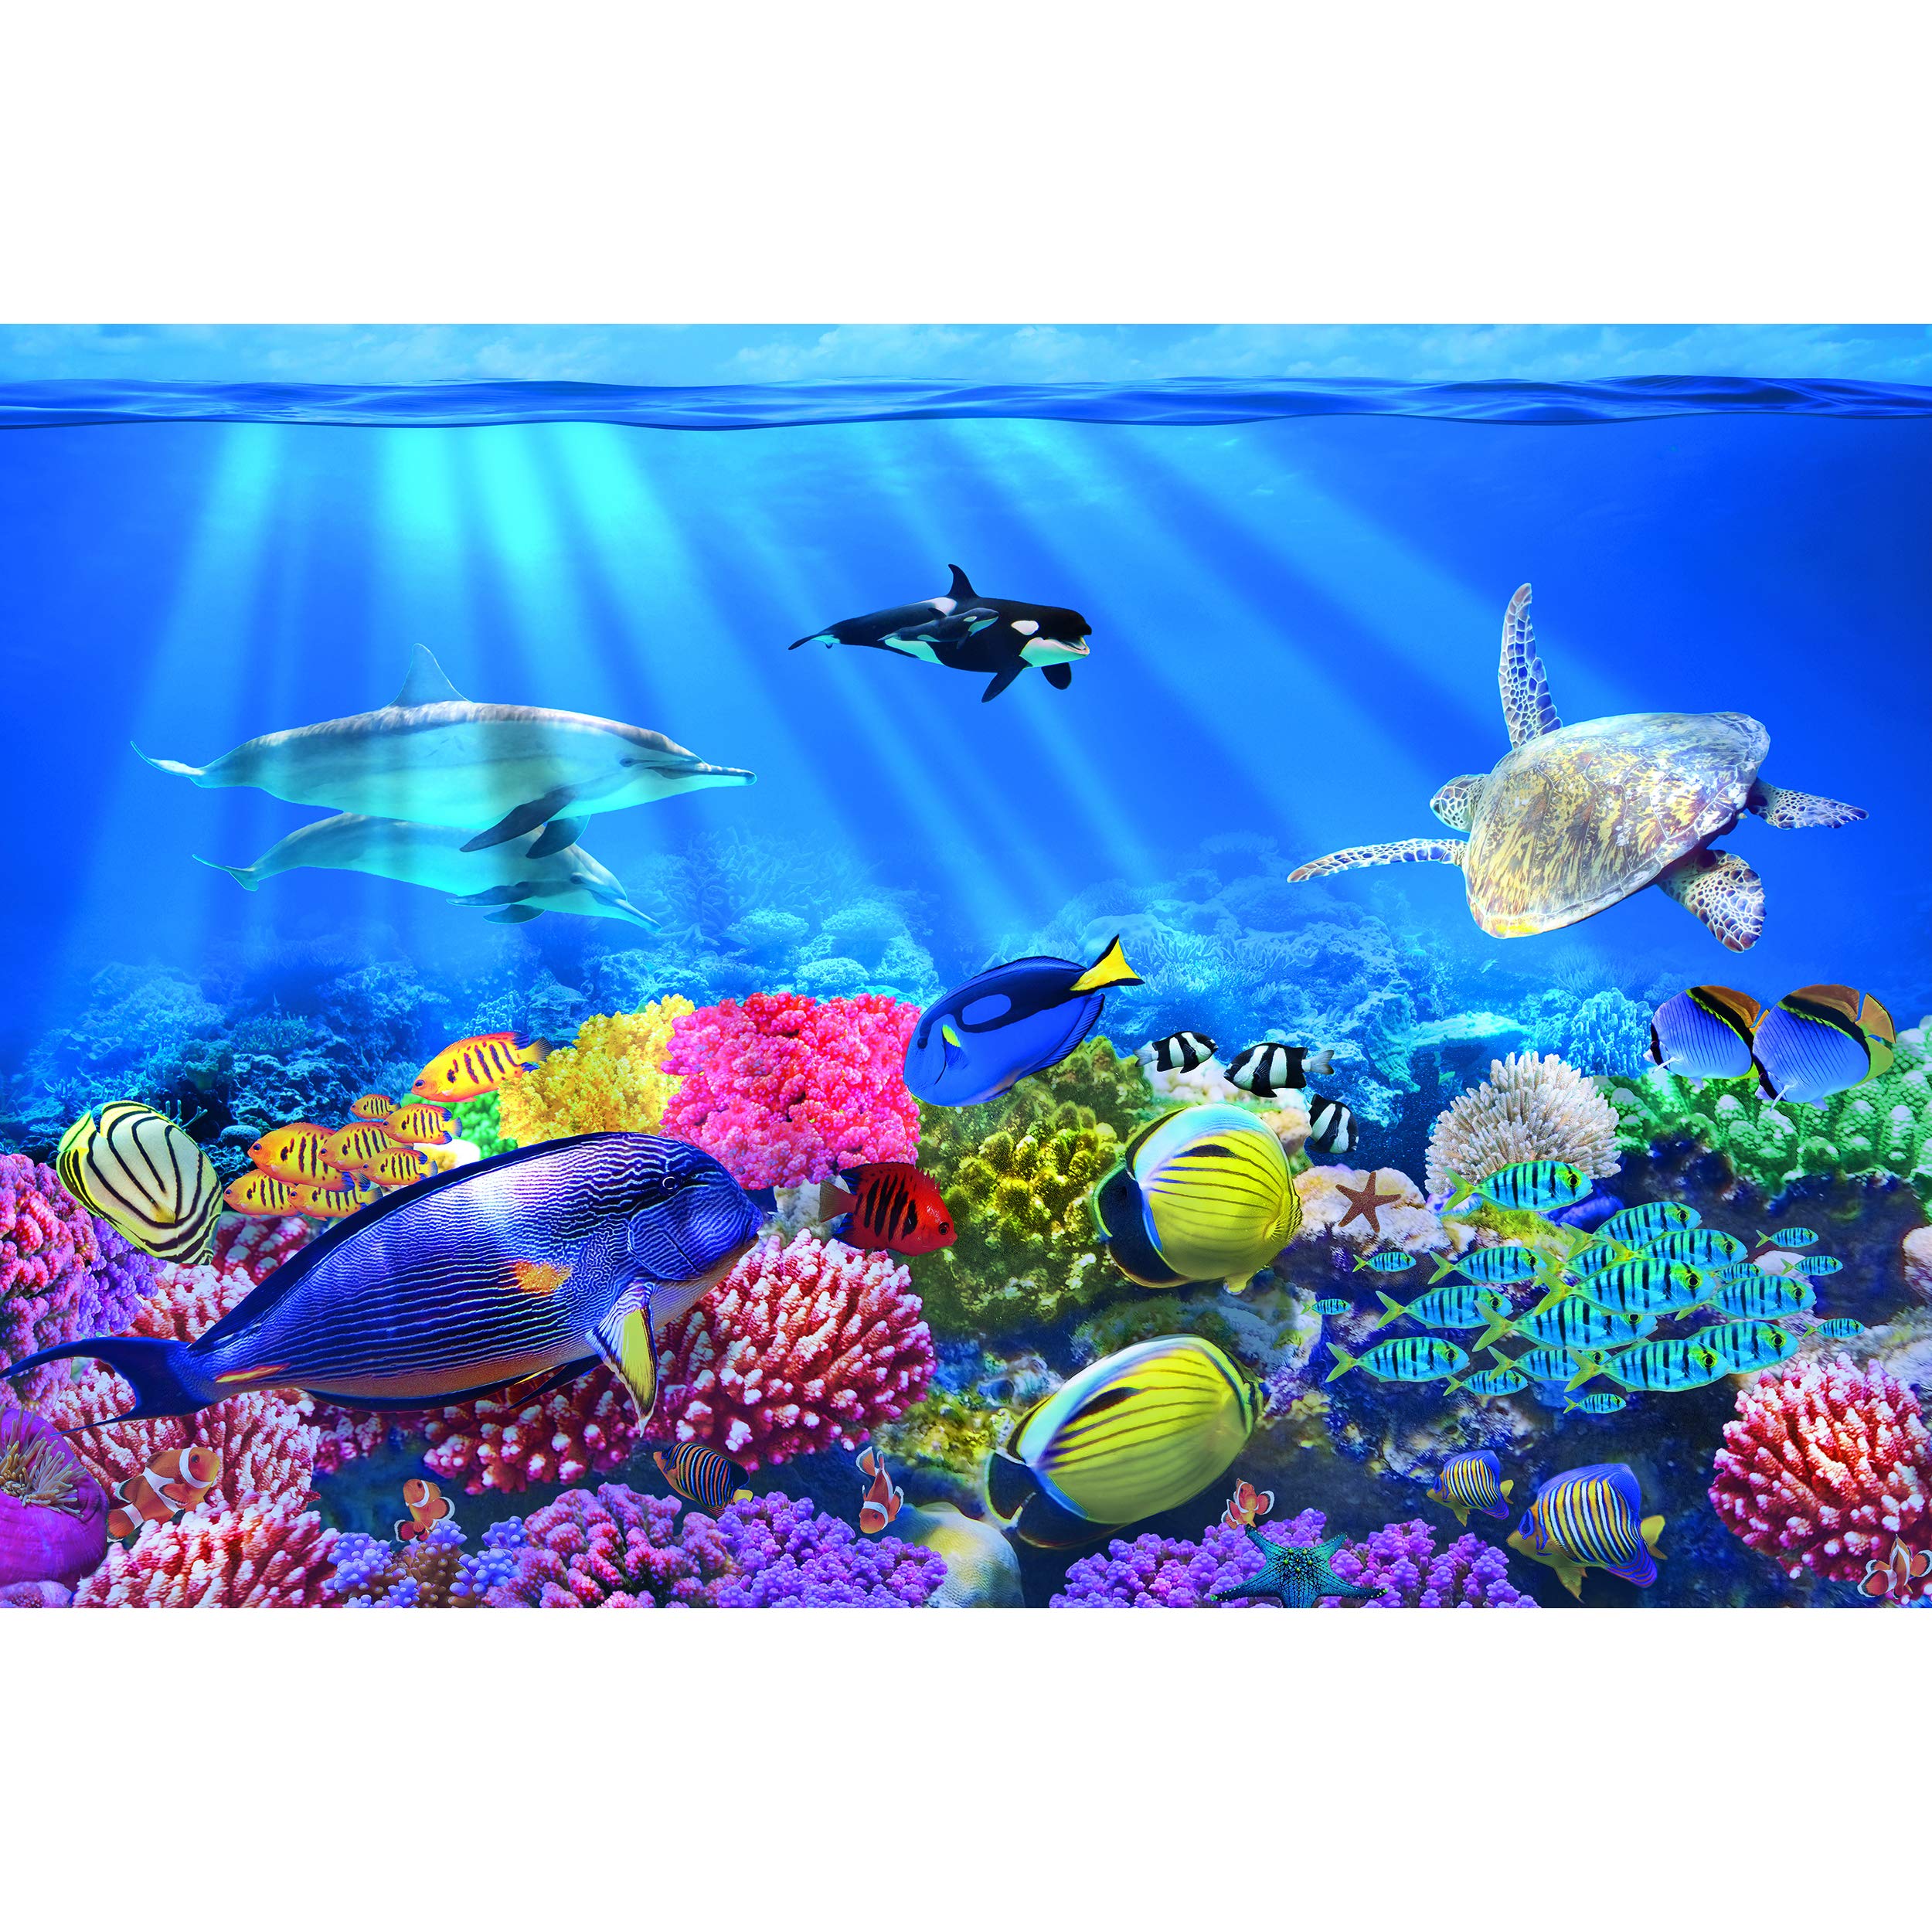 Kid’s Room Nursery Large Photo Wallpaper – Aquarium – Picture Decoration Underwater World Sea Dweller Ocean Fishes Coral Reef Image Decor Wall Mura...